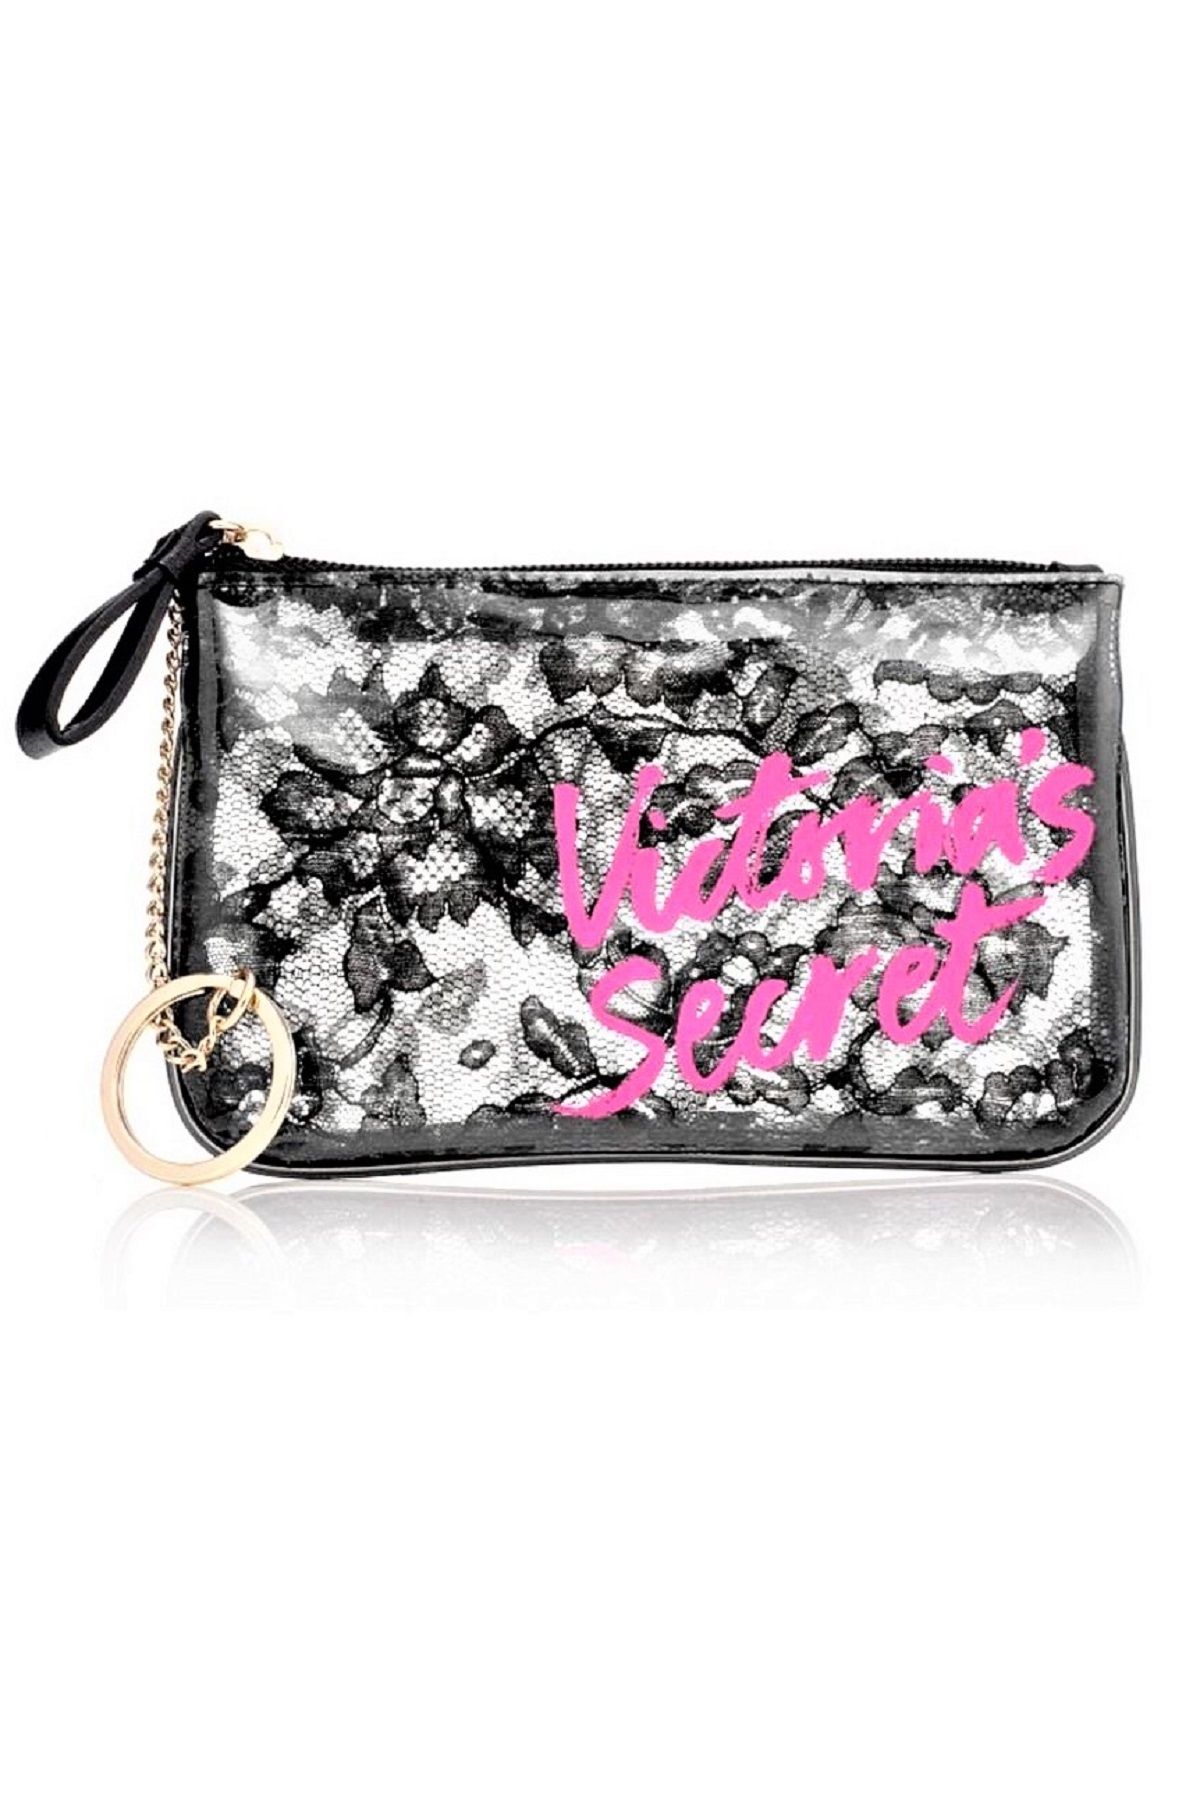 Victoria Secret women's tote purse Black Pink Beaded Silver size Large |  eBay